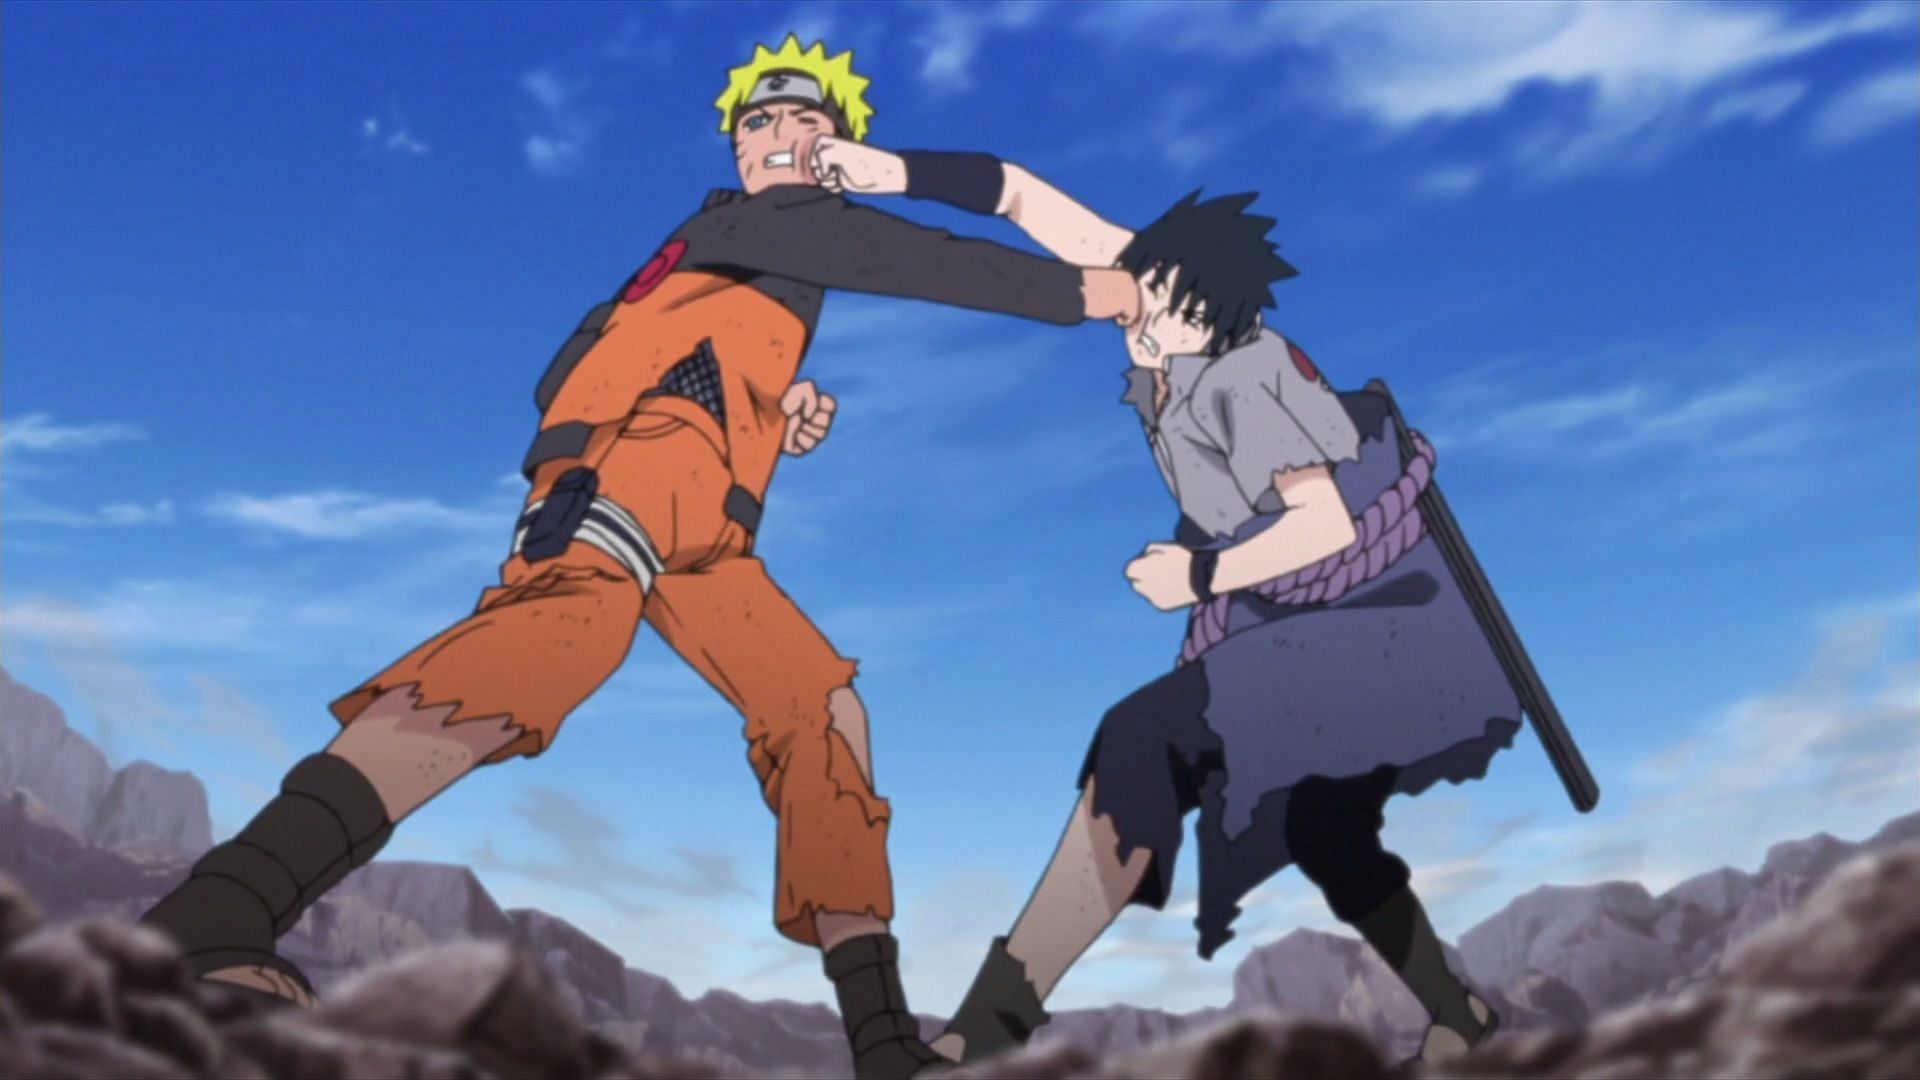 Naruto (left) and Sasuke (right) as seen in the Naruto anime (Image via Studio Pierrot)